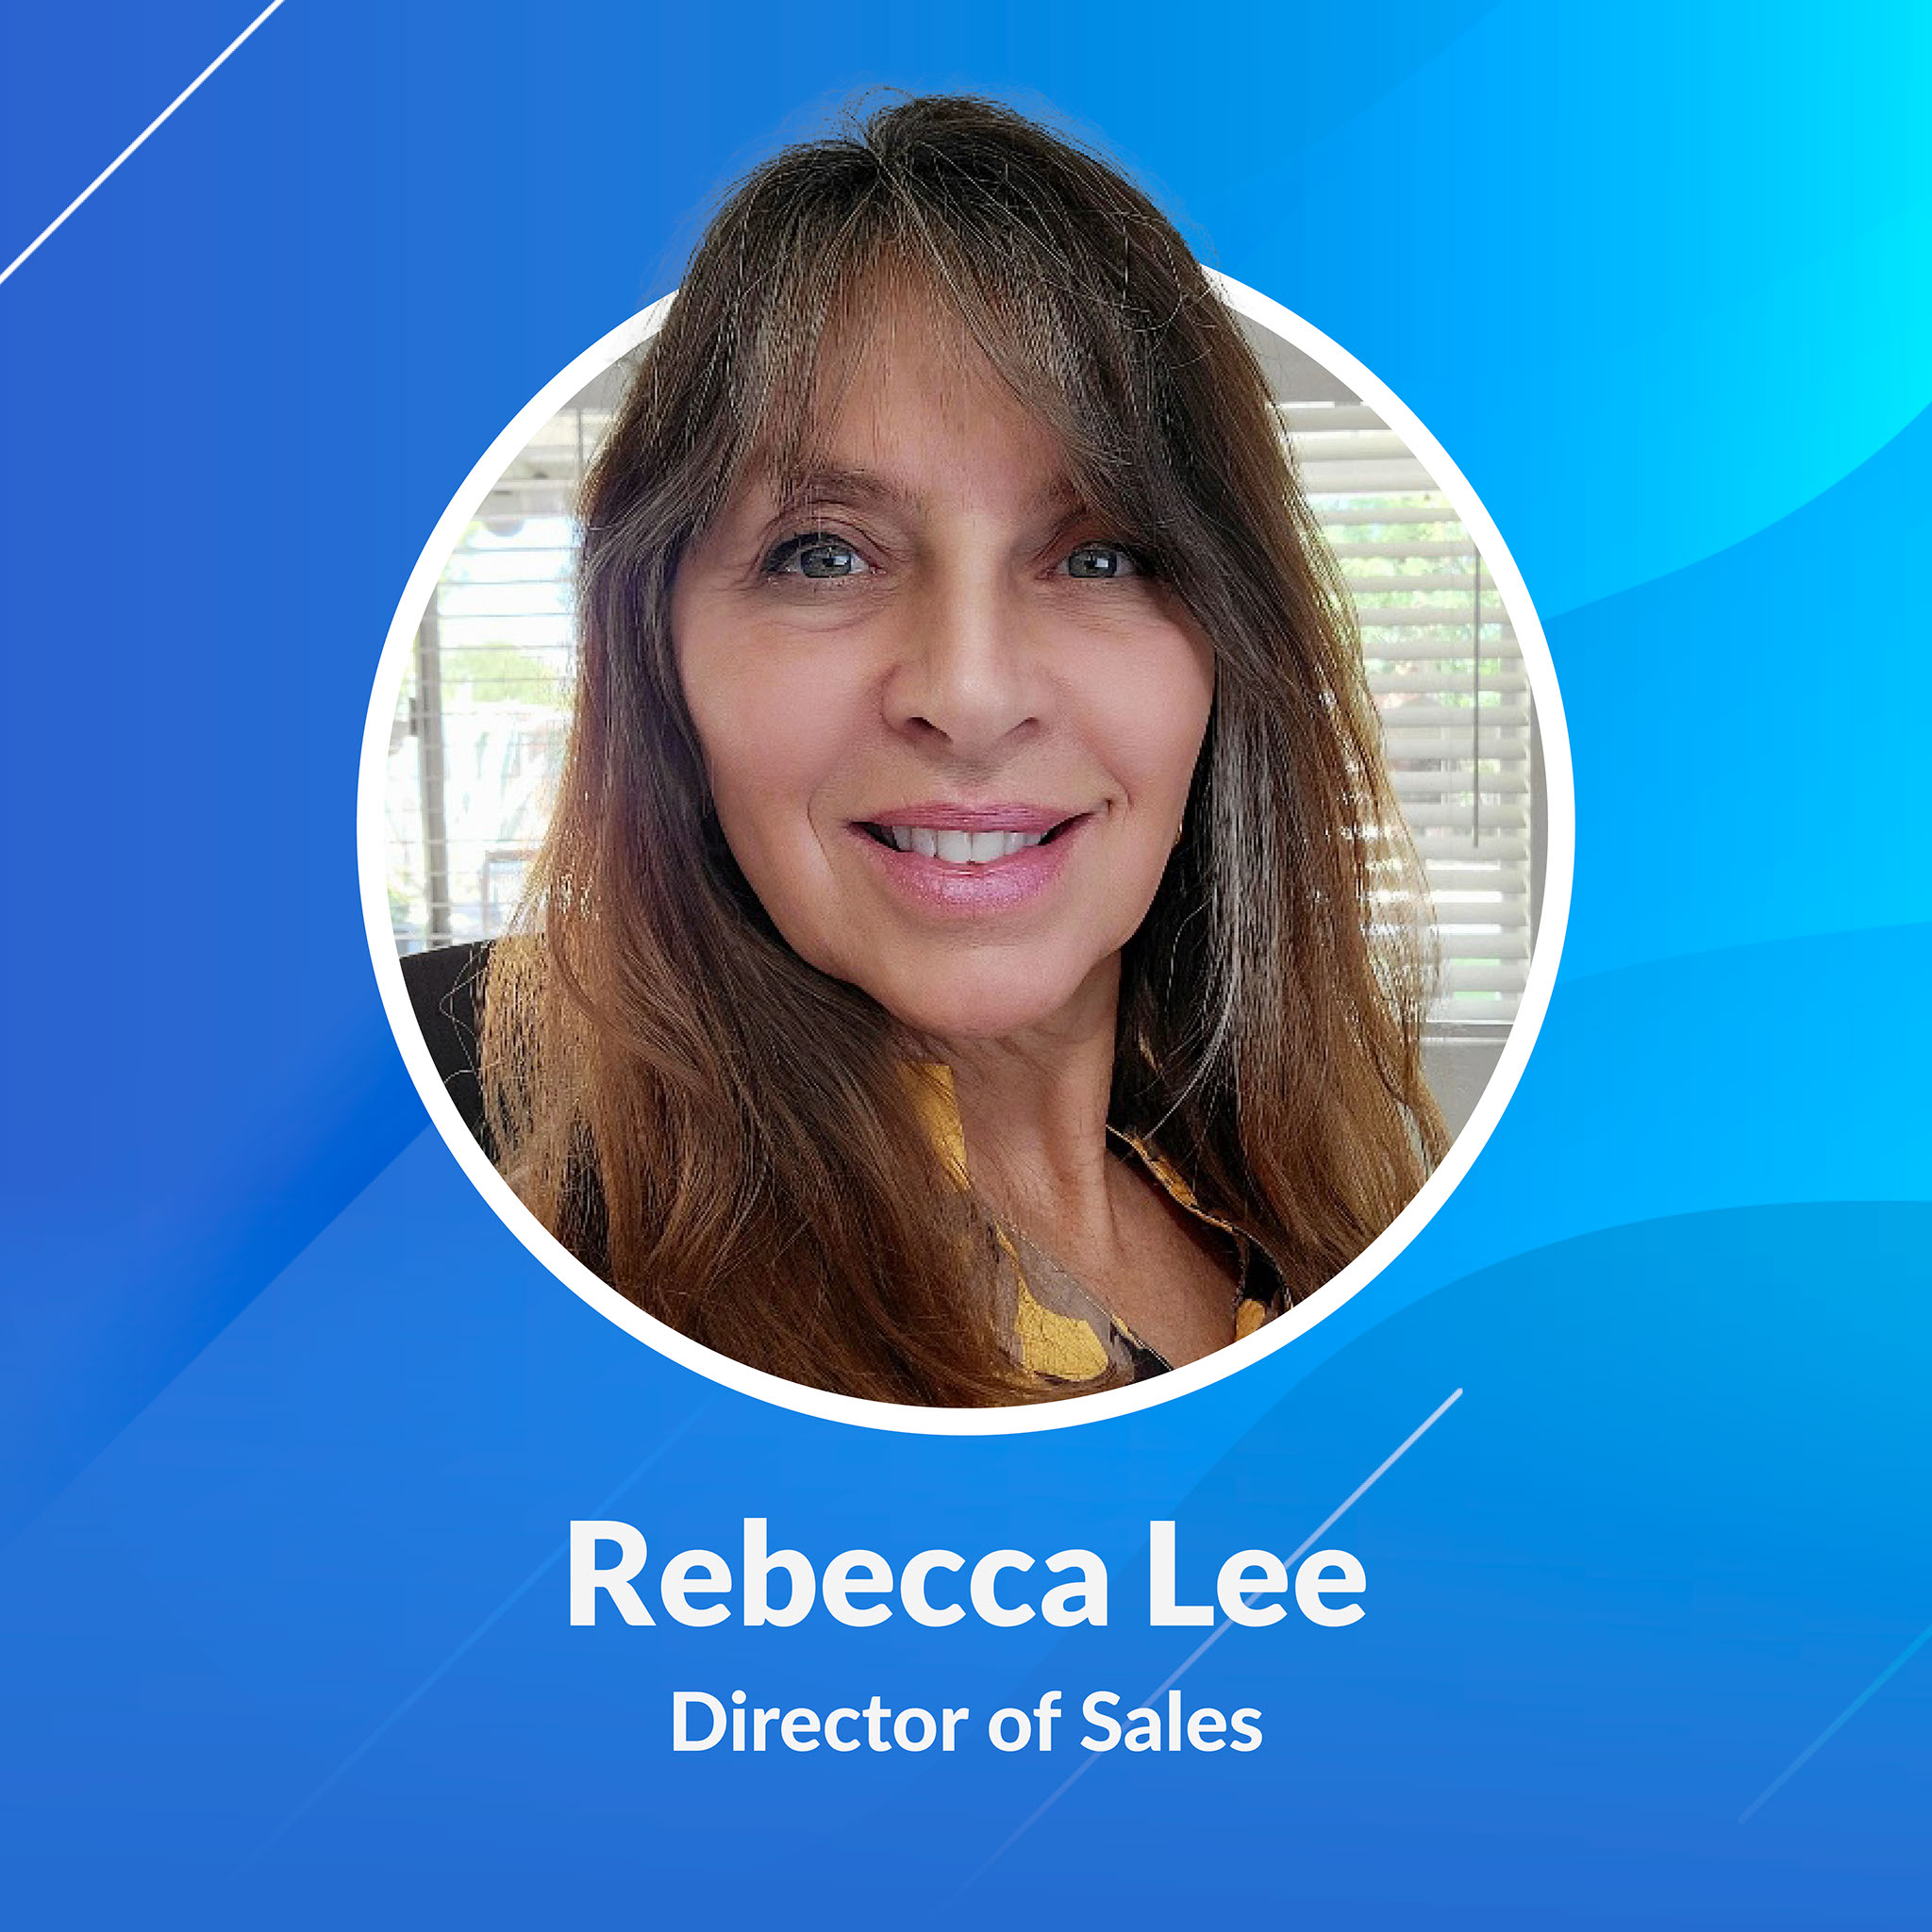 Welcome Rebecca Lee, Director of Sales